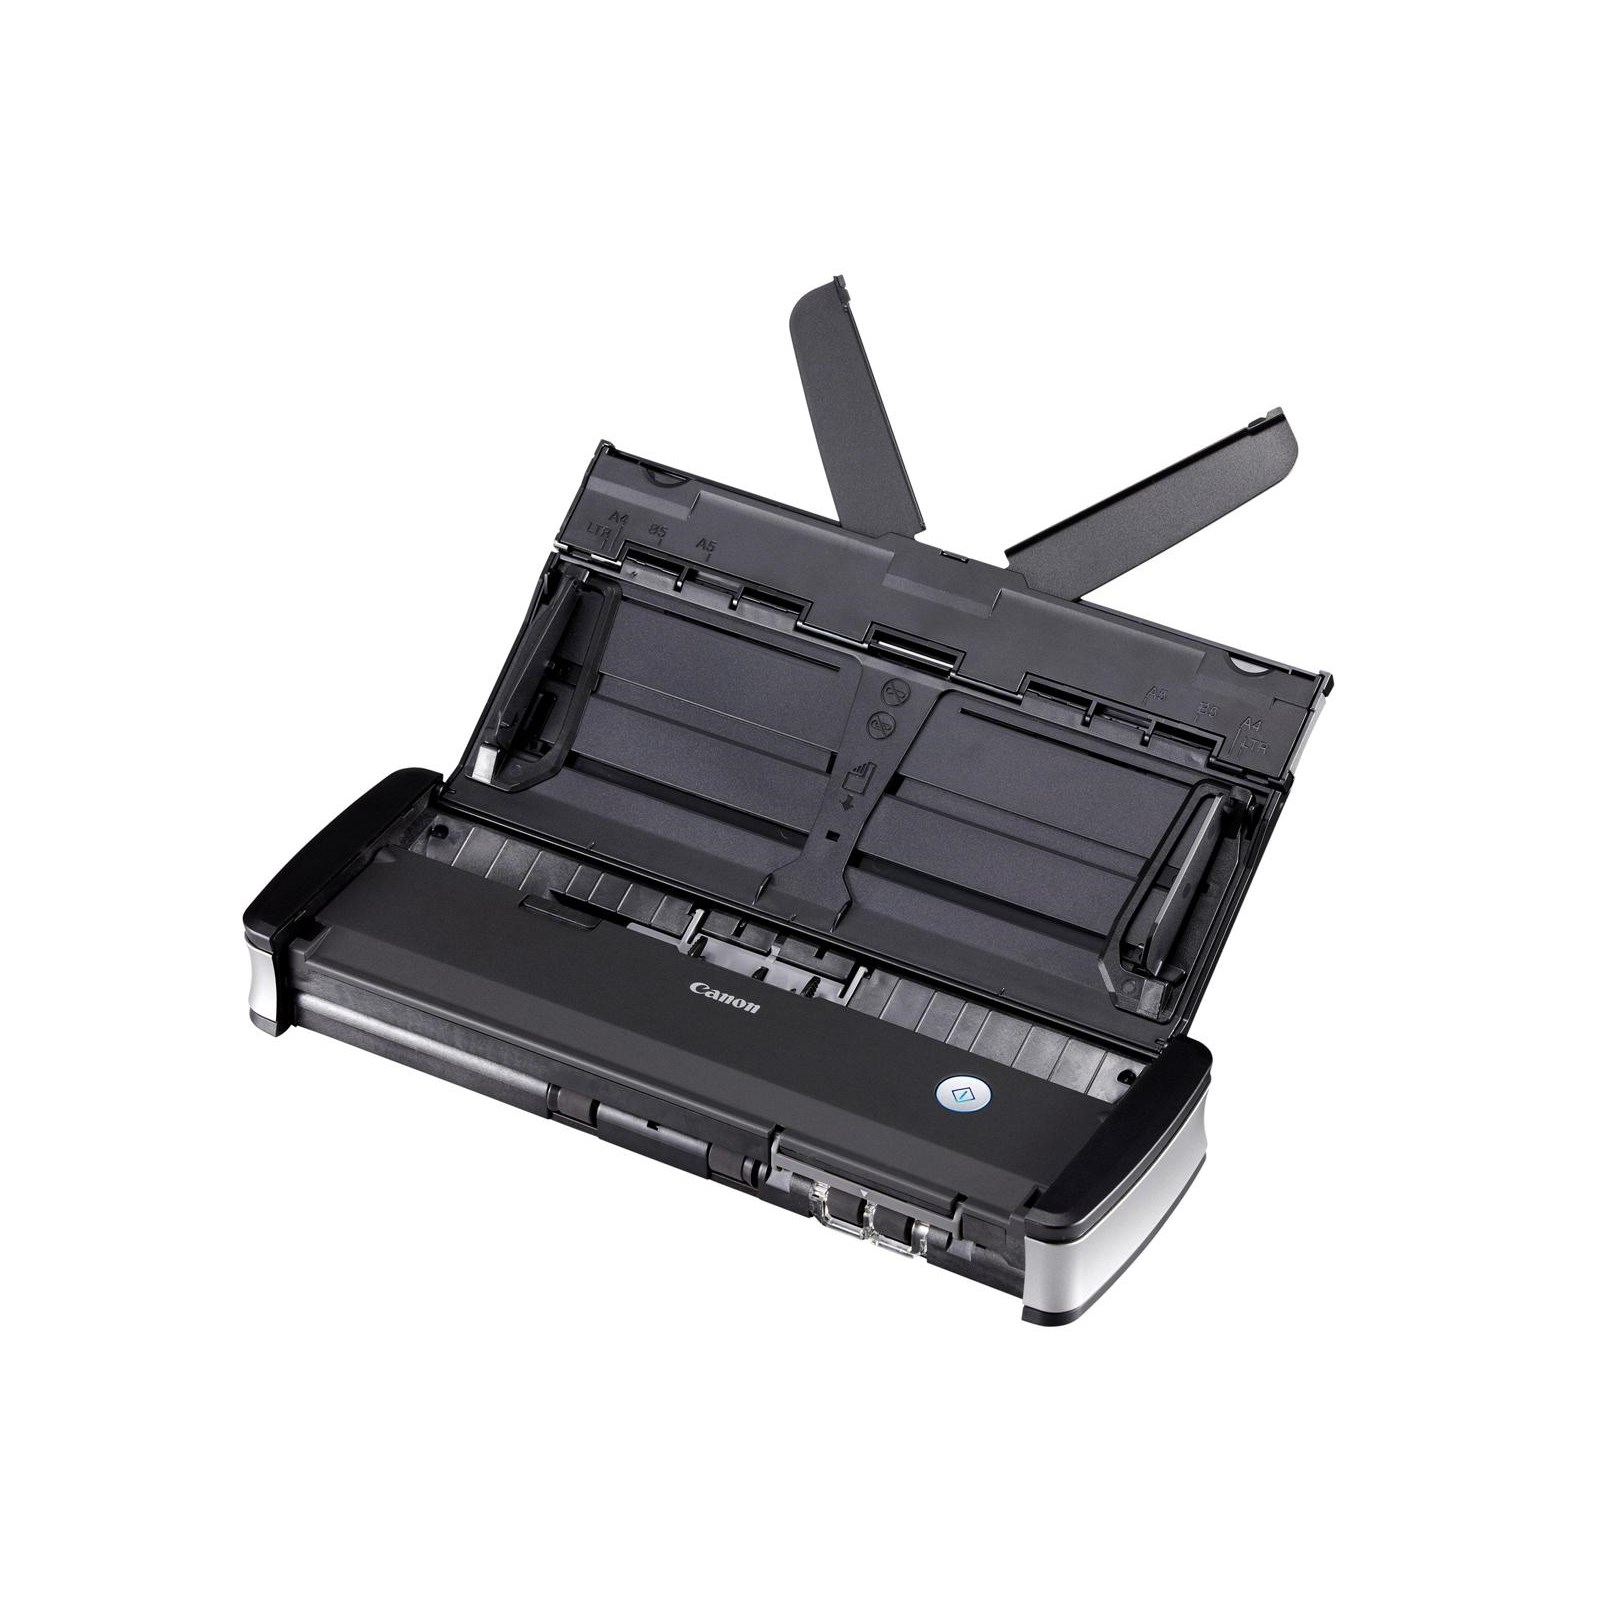 Buy Canon imageFORMULA P-215II Portable duplex document scanner A4